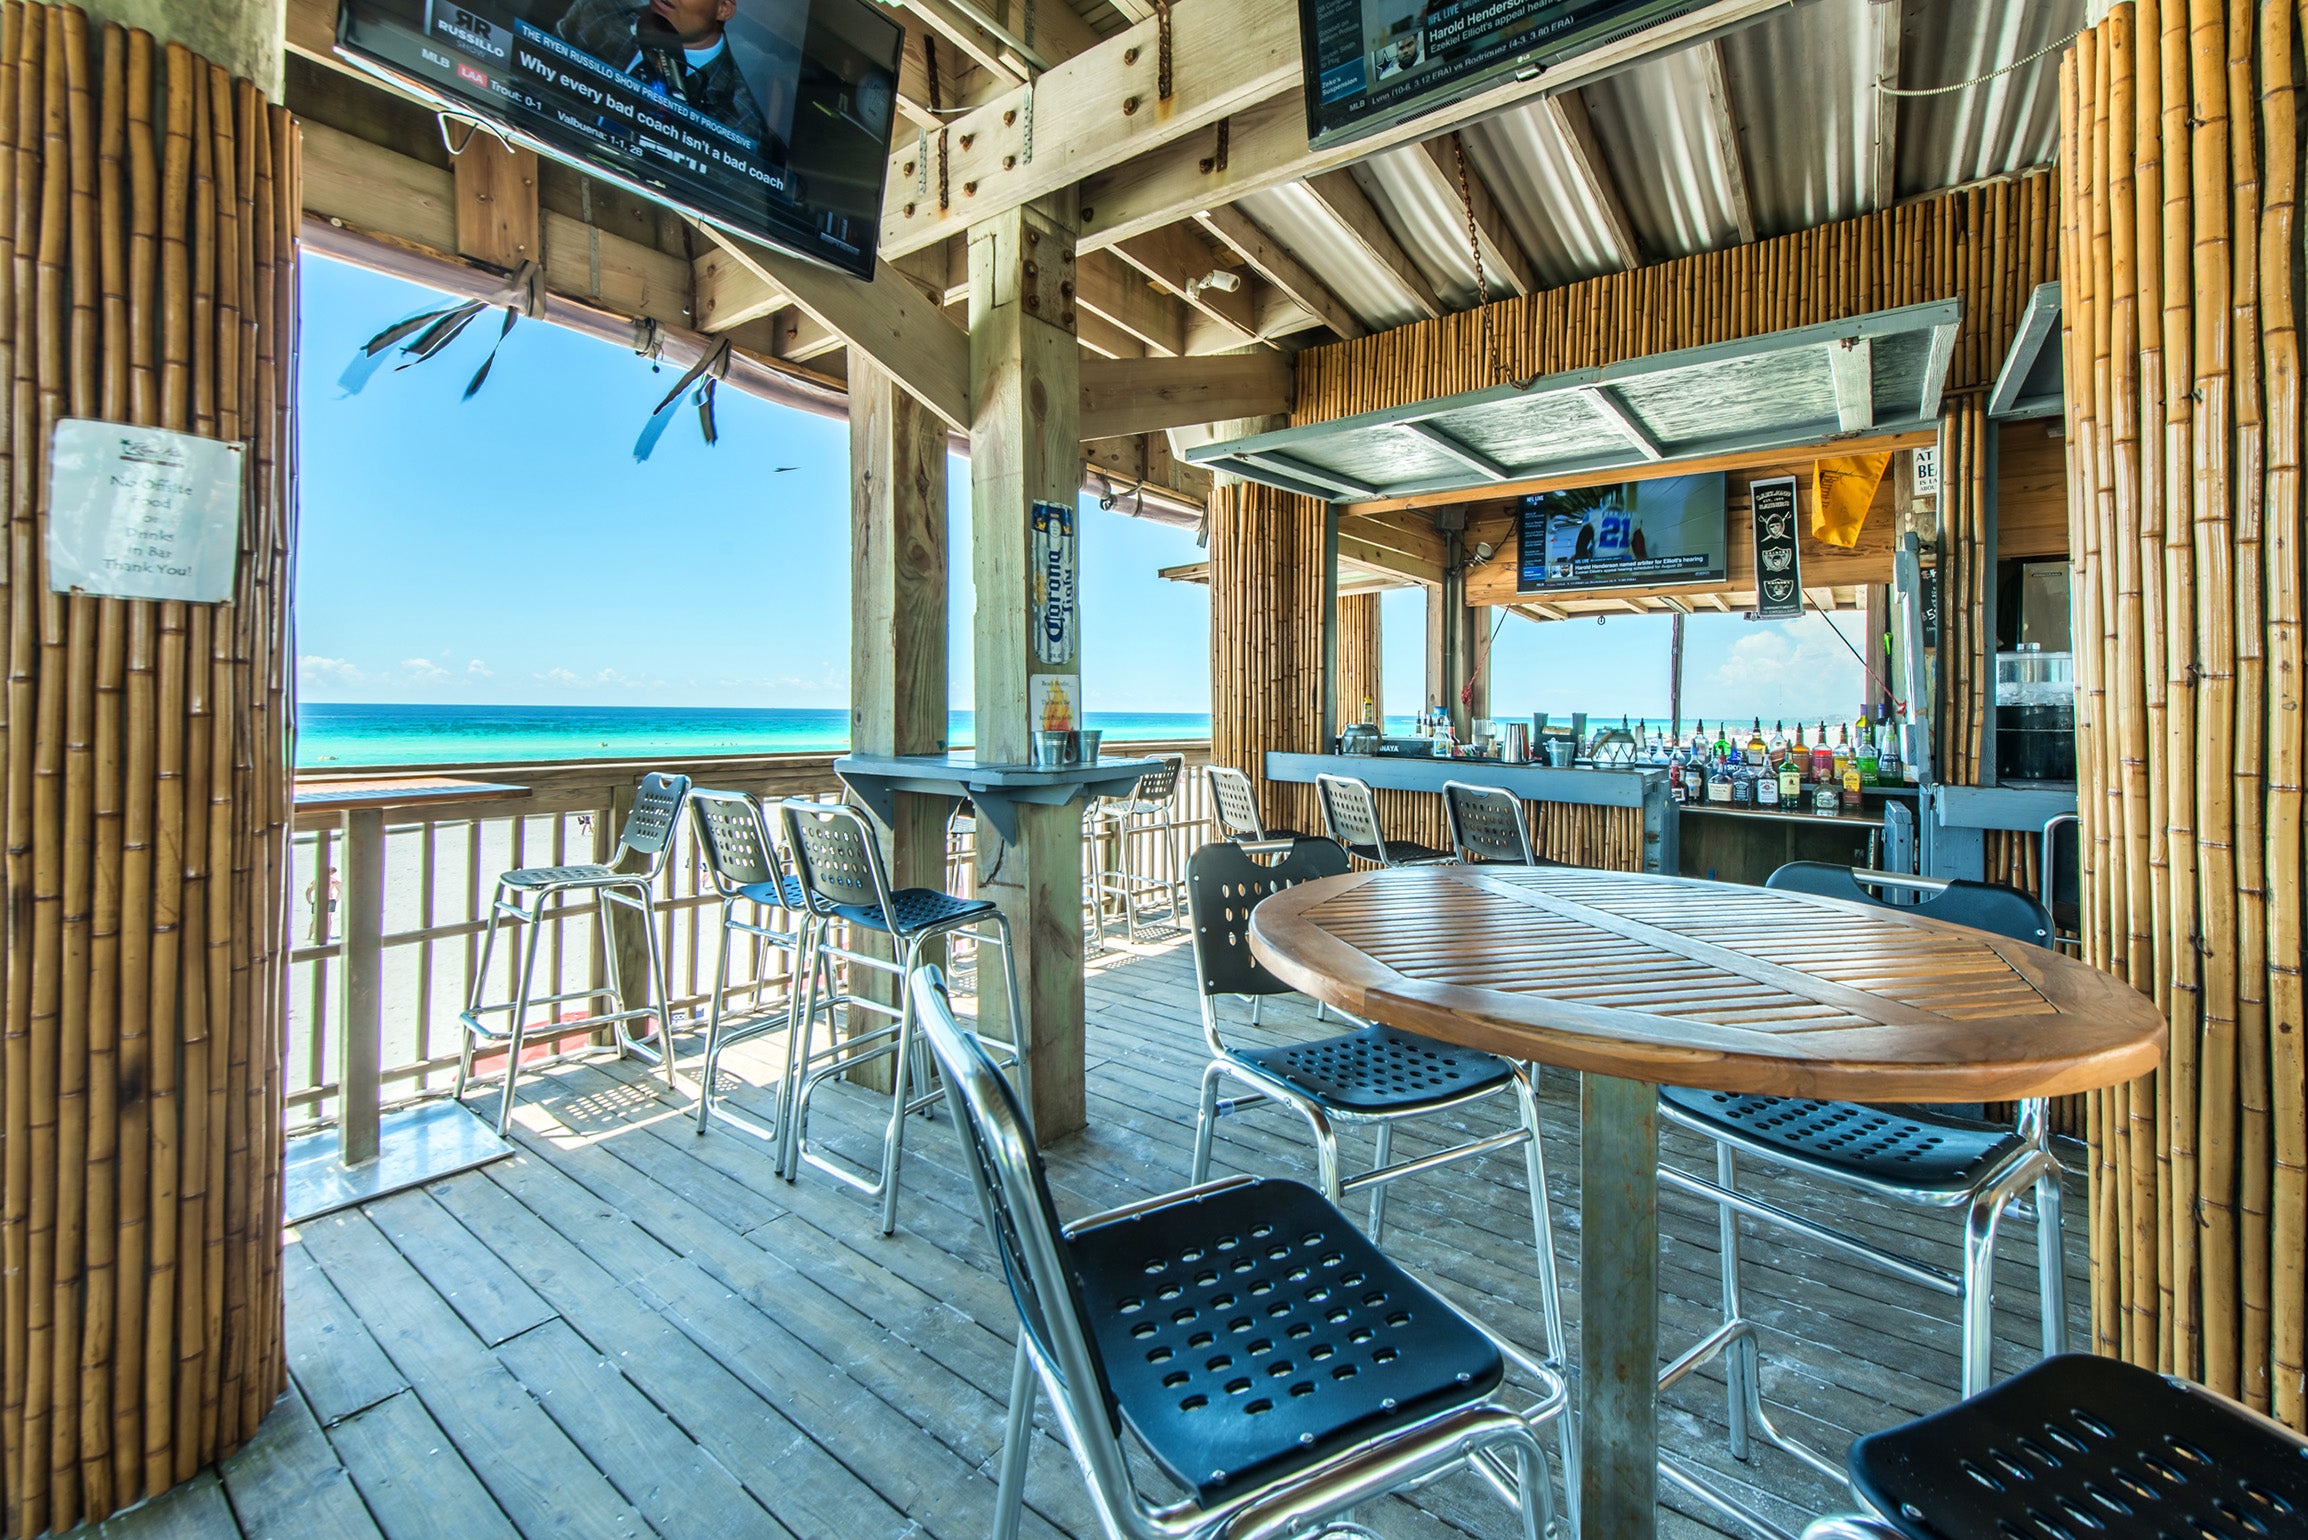 Gulf side beach bar 